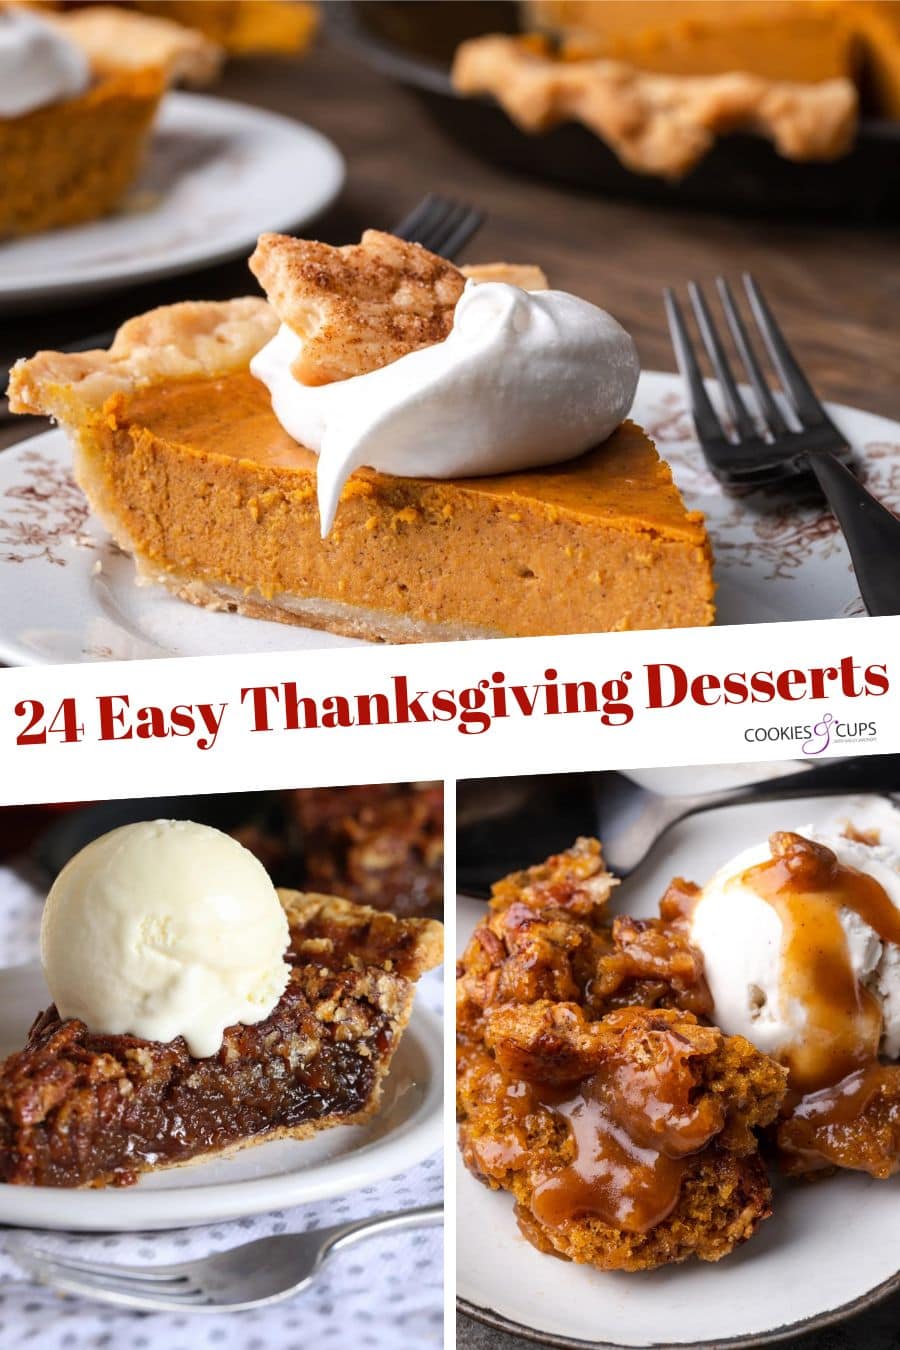 https://cookiesandcups.com/wp-content/uploads/2022/11/24-Easy-Thanksgiving-Desserts.jpg